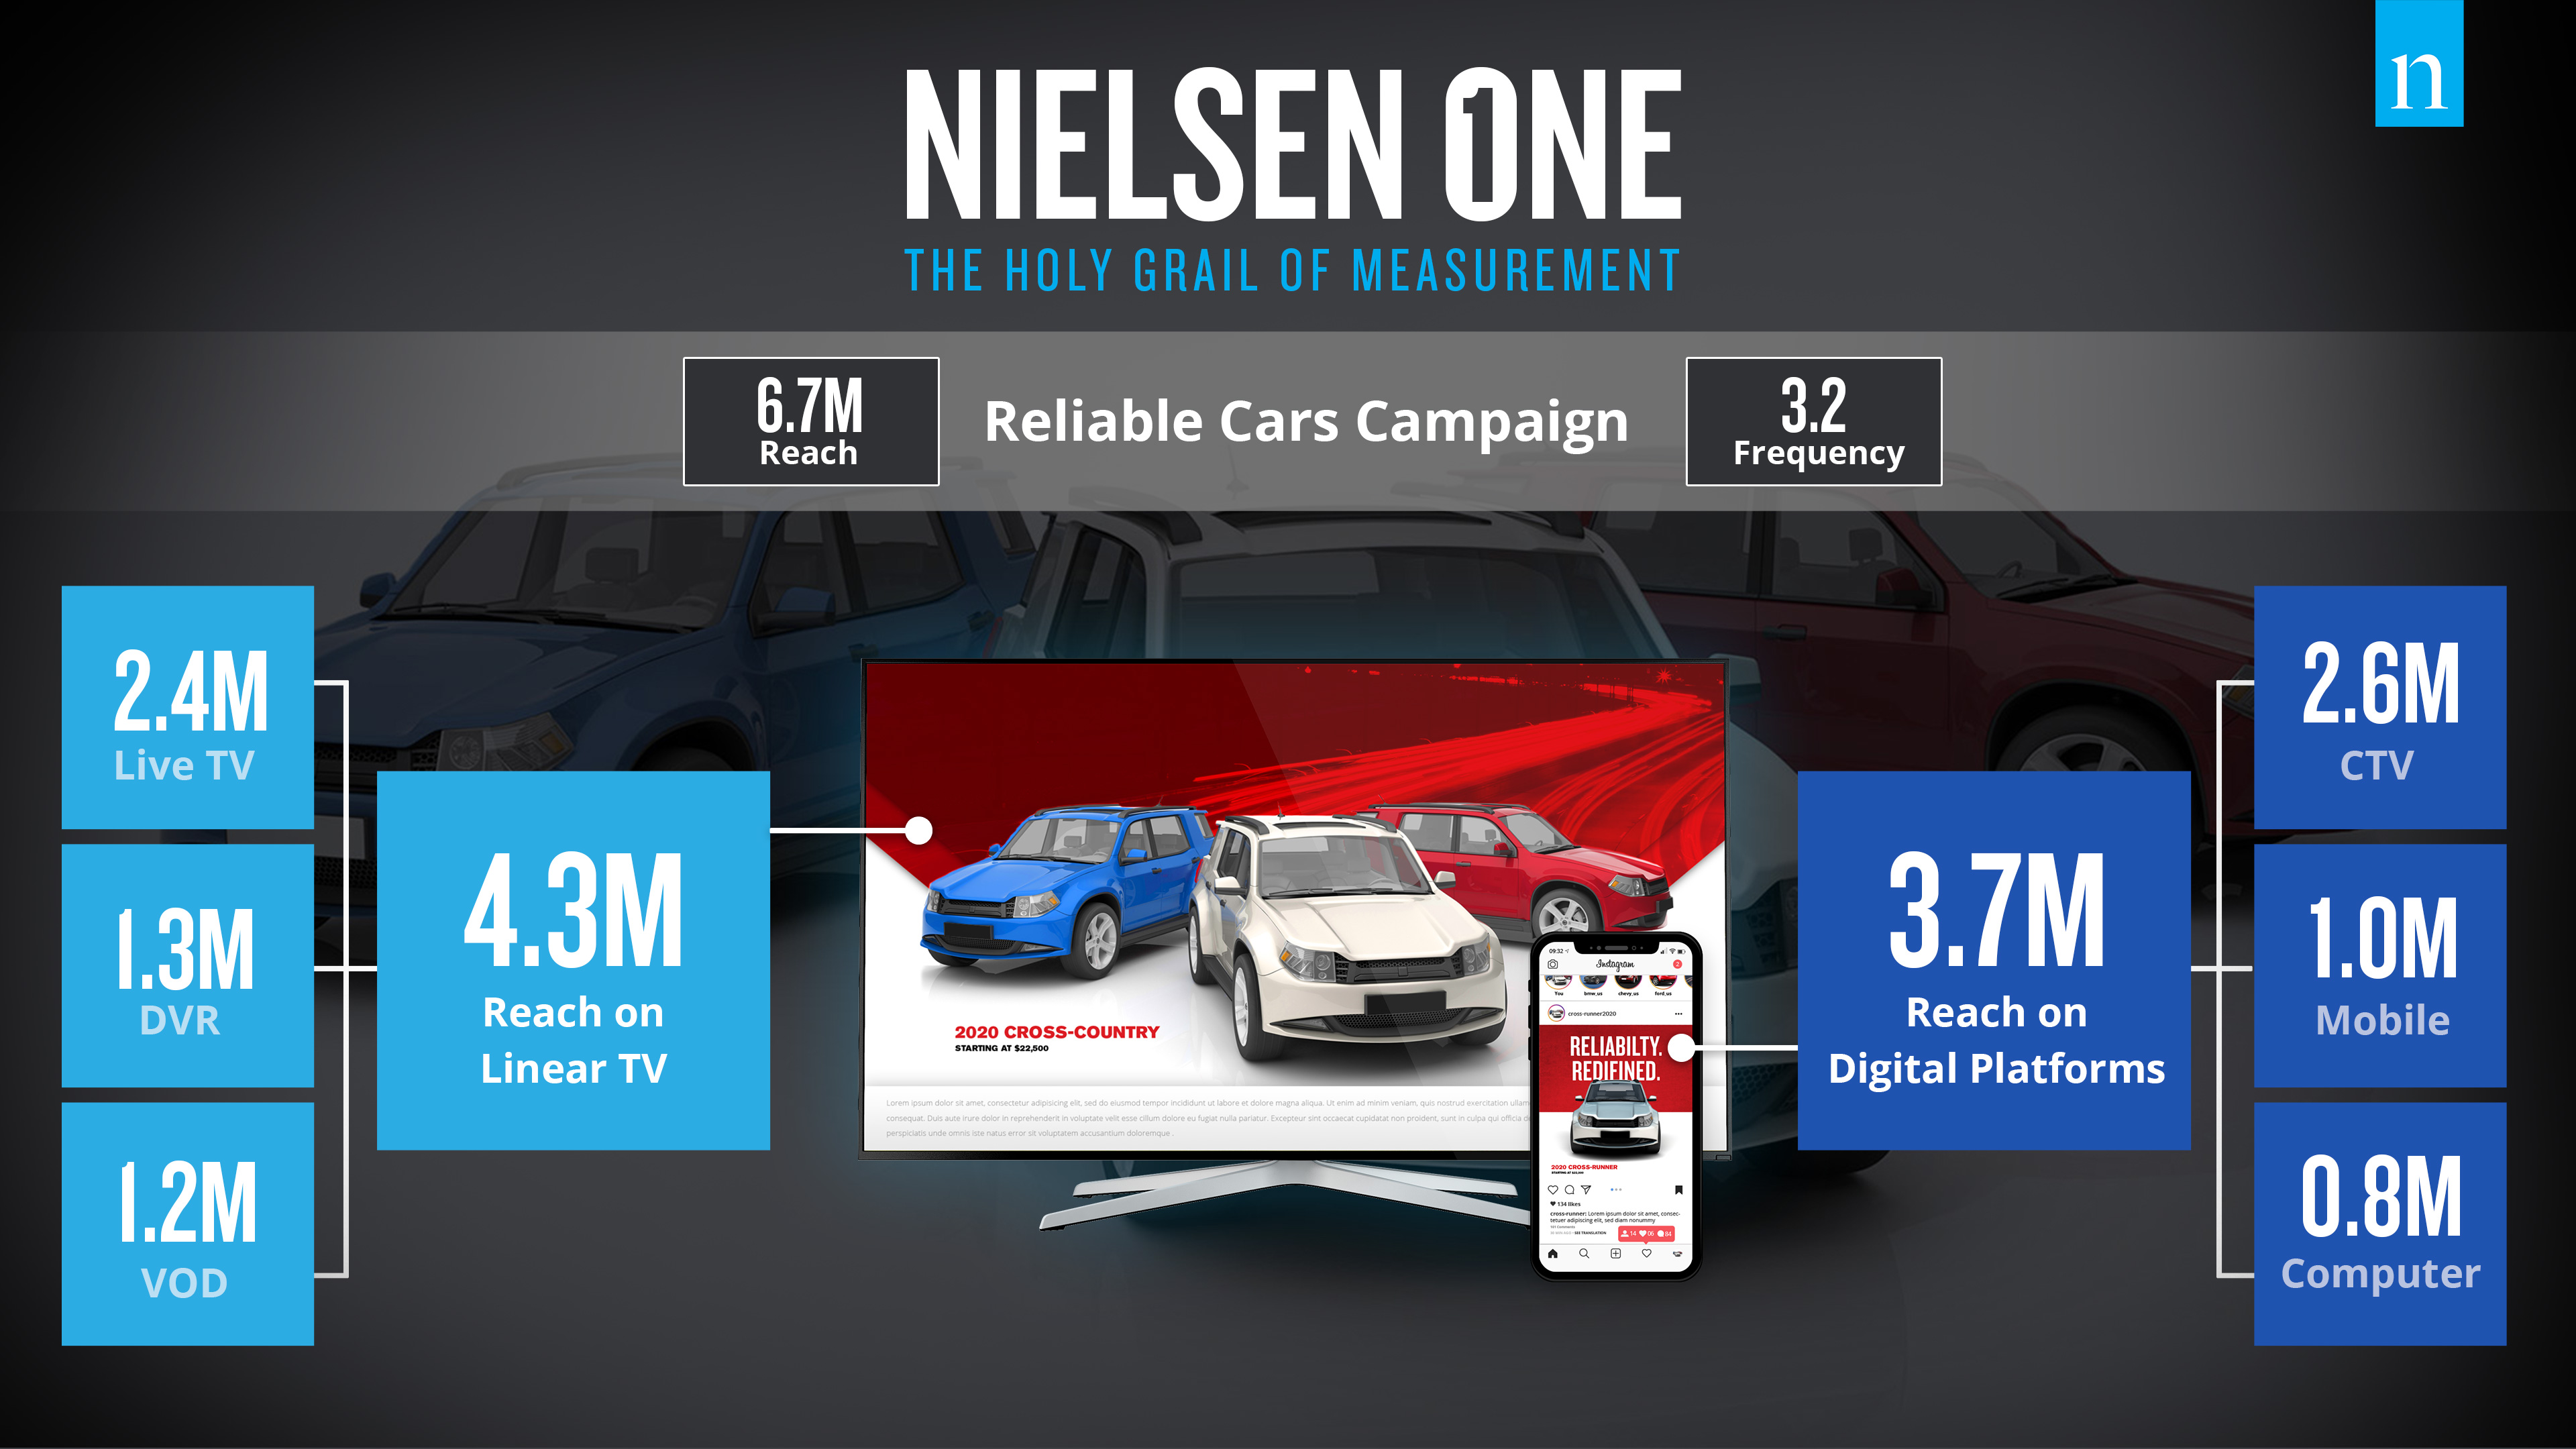 Nielsen measures the social conversation around TV